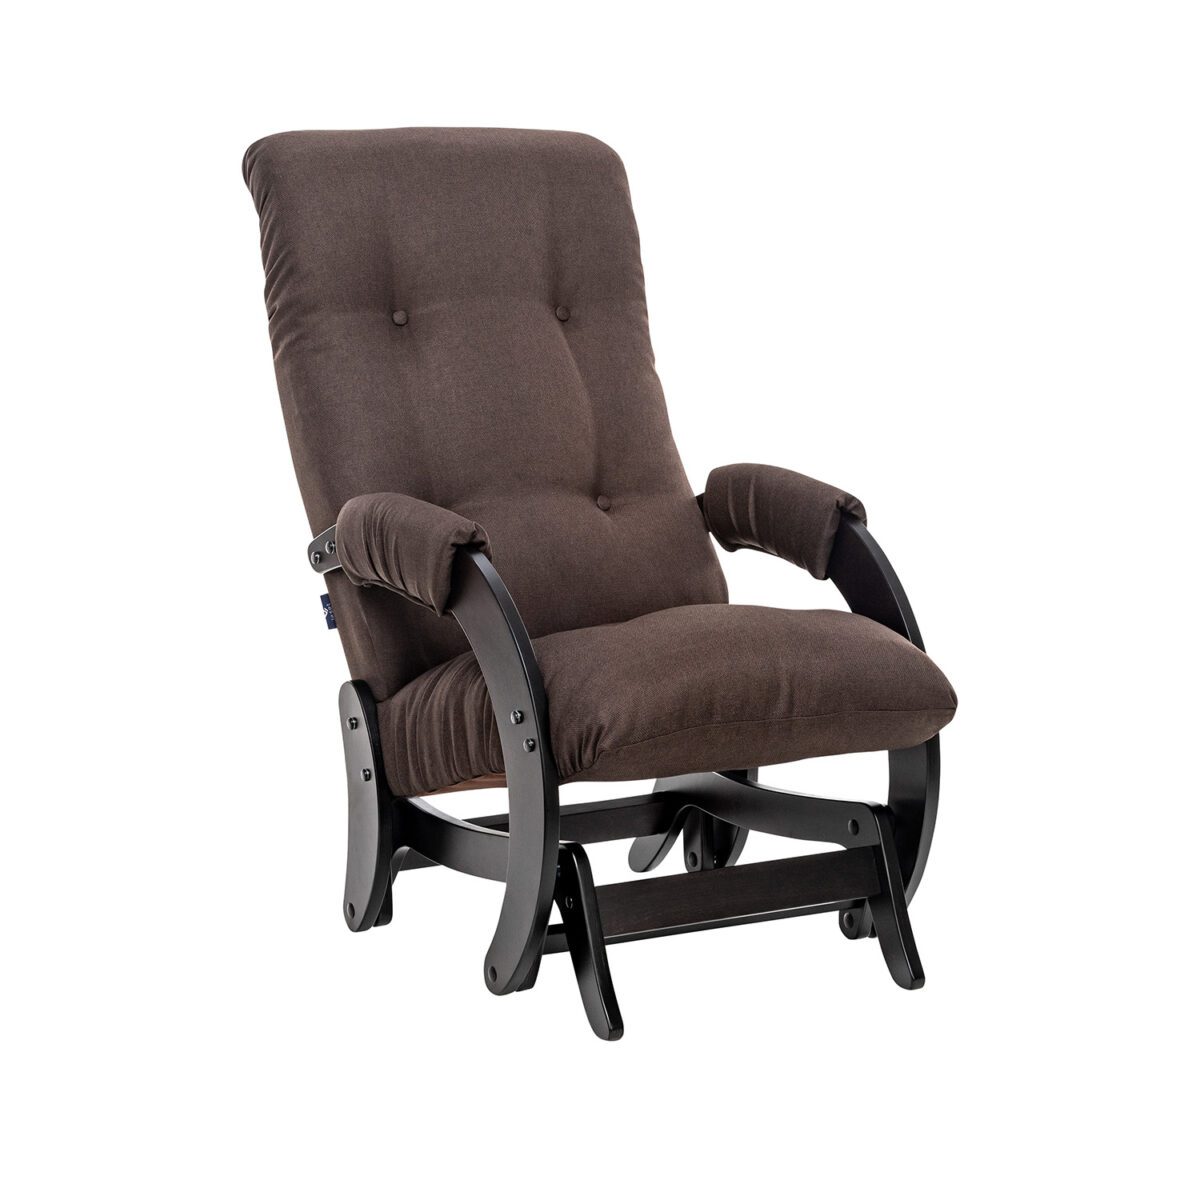 Кресло-качалка Модель 68 (Leset Футура) Венге текстура, ткань Malmo 28